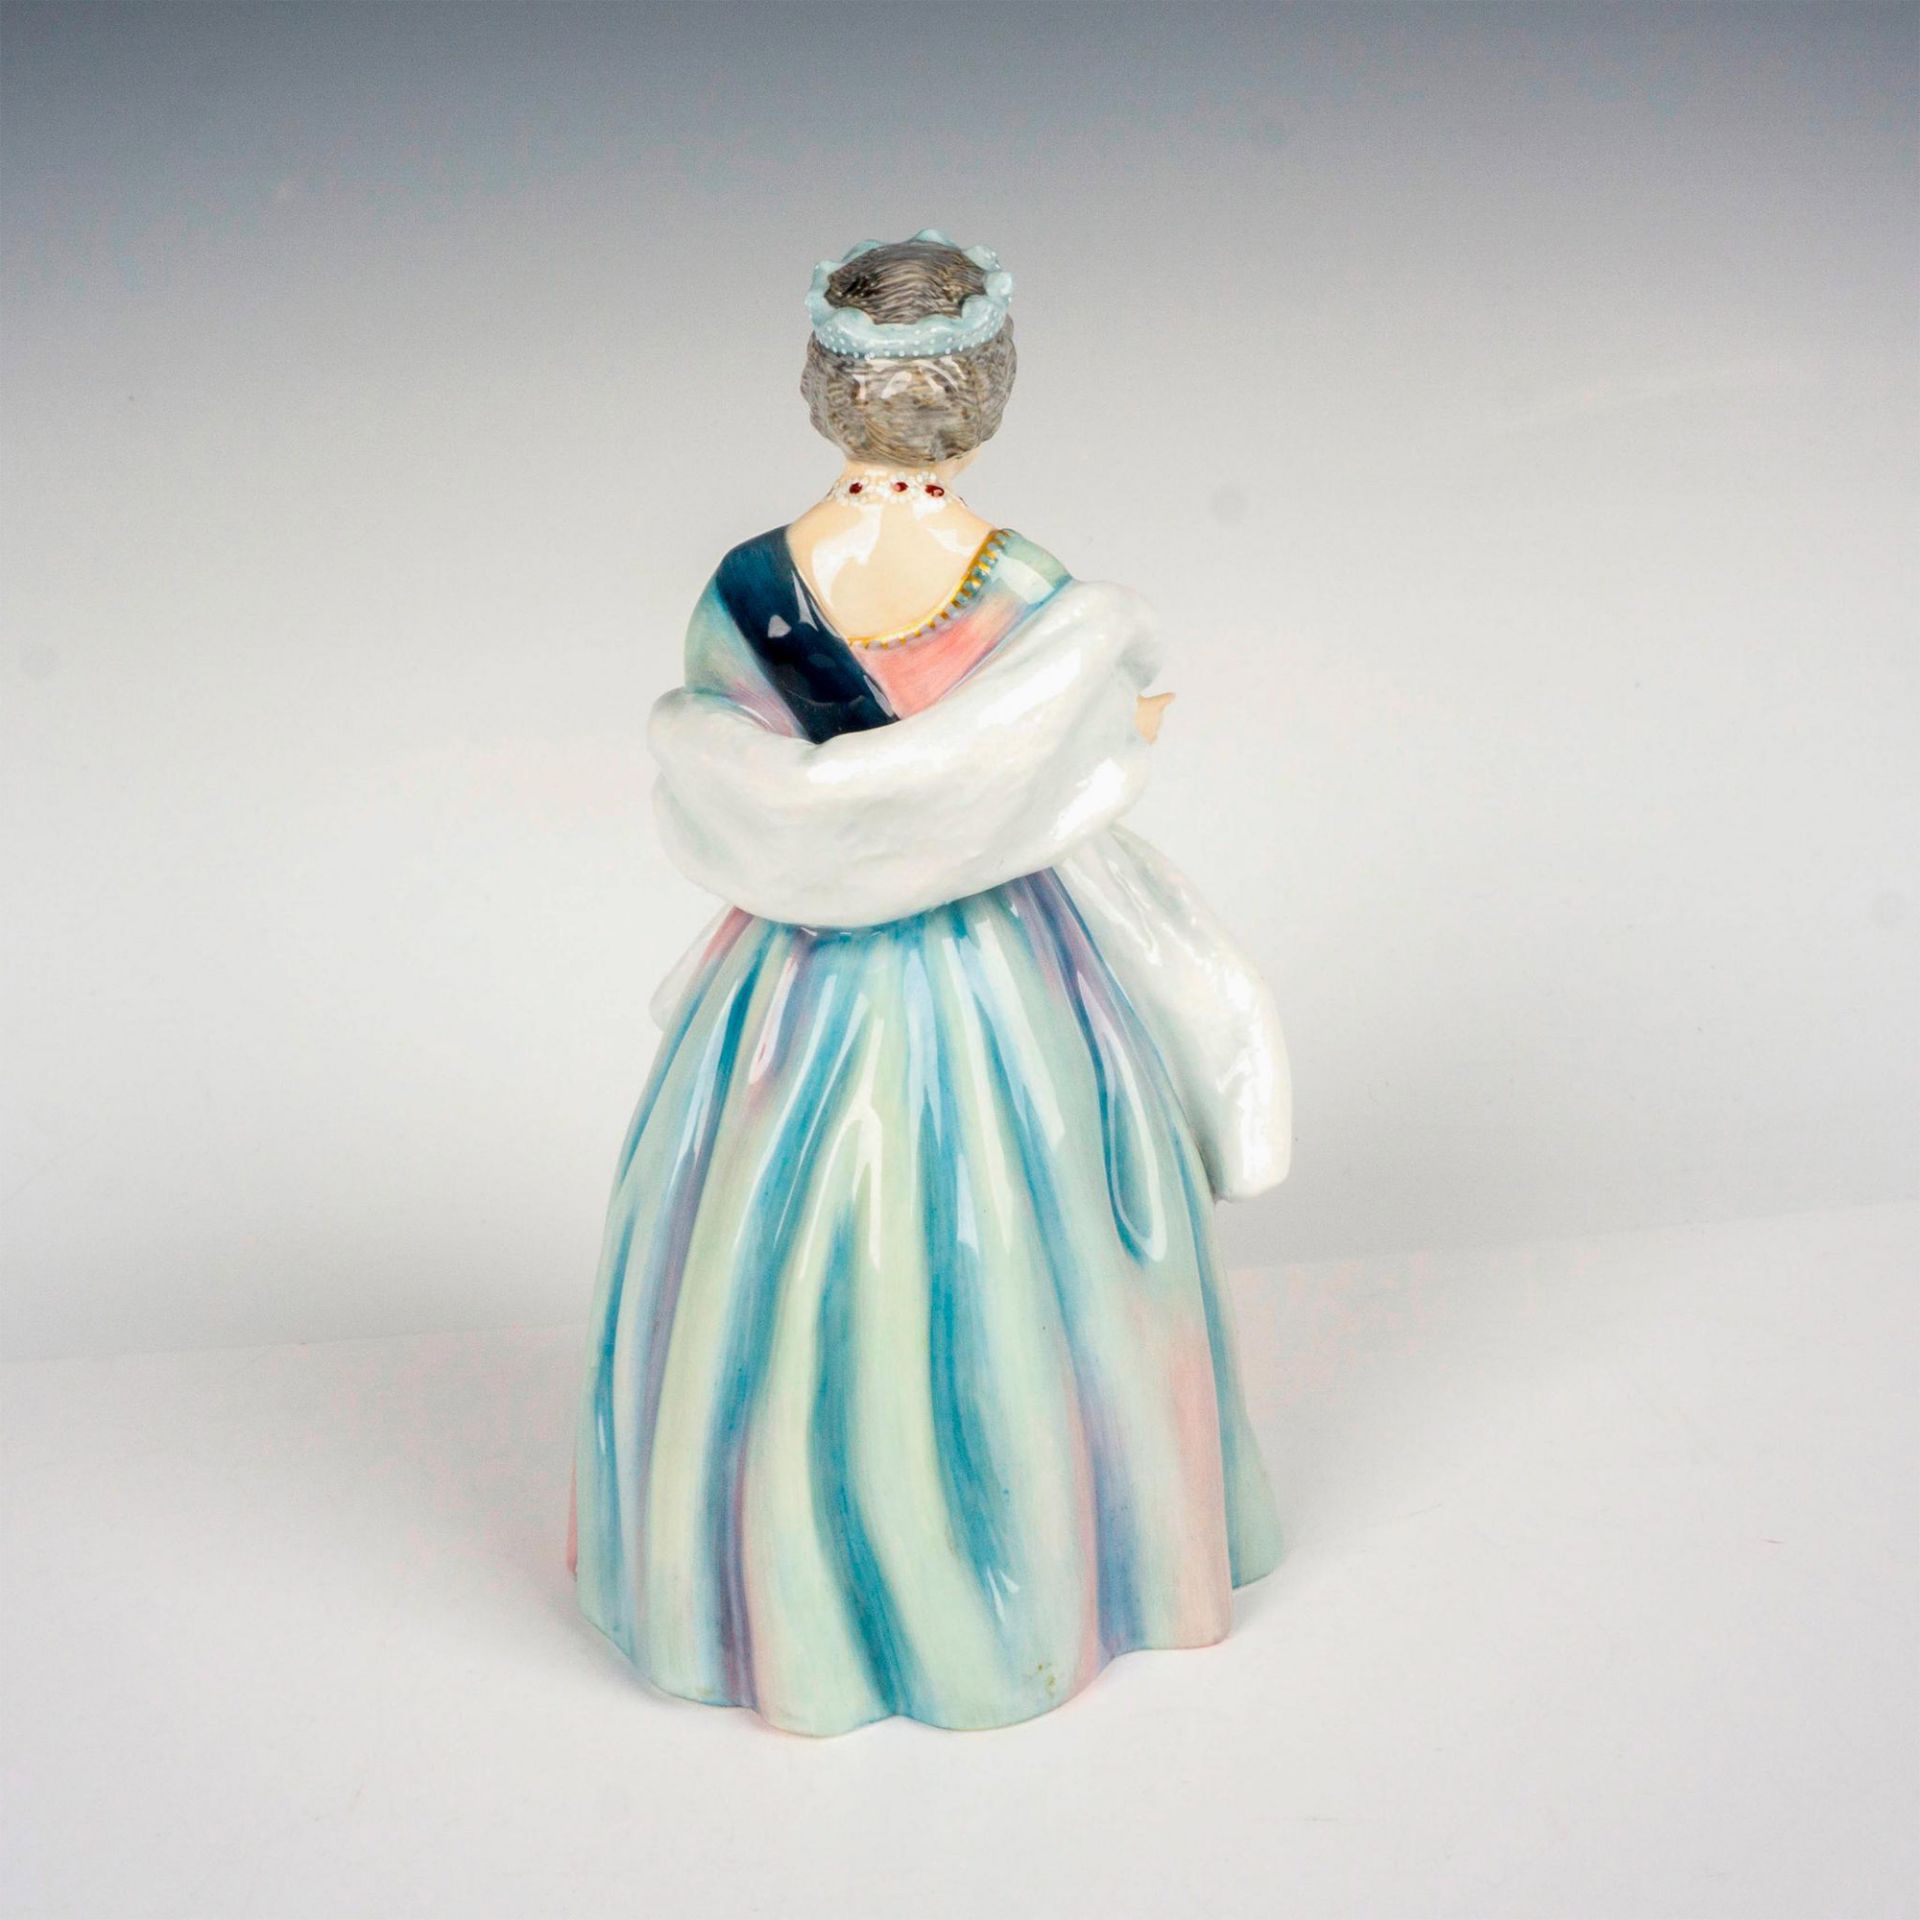 Queen Elizabeth Queen Mother HN3189 - Royal Doulton Figurine - Image 2 of 3